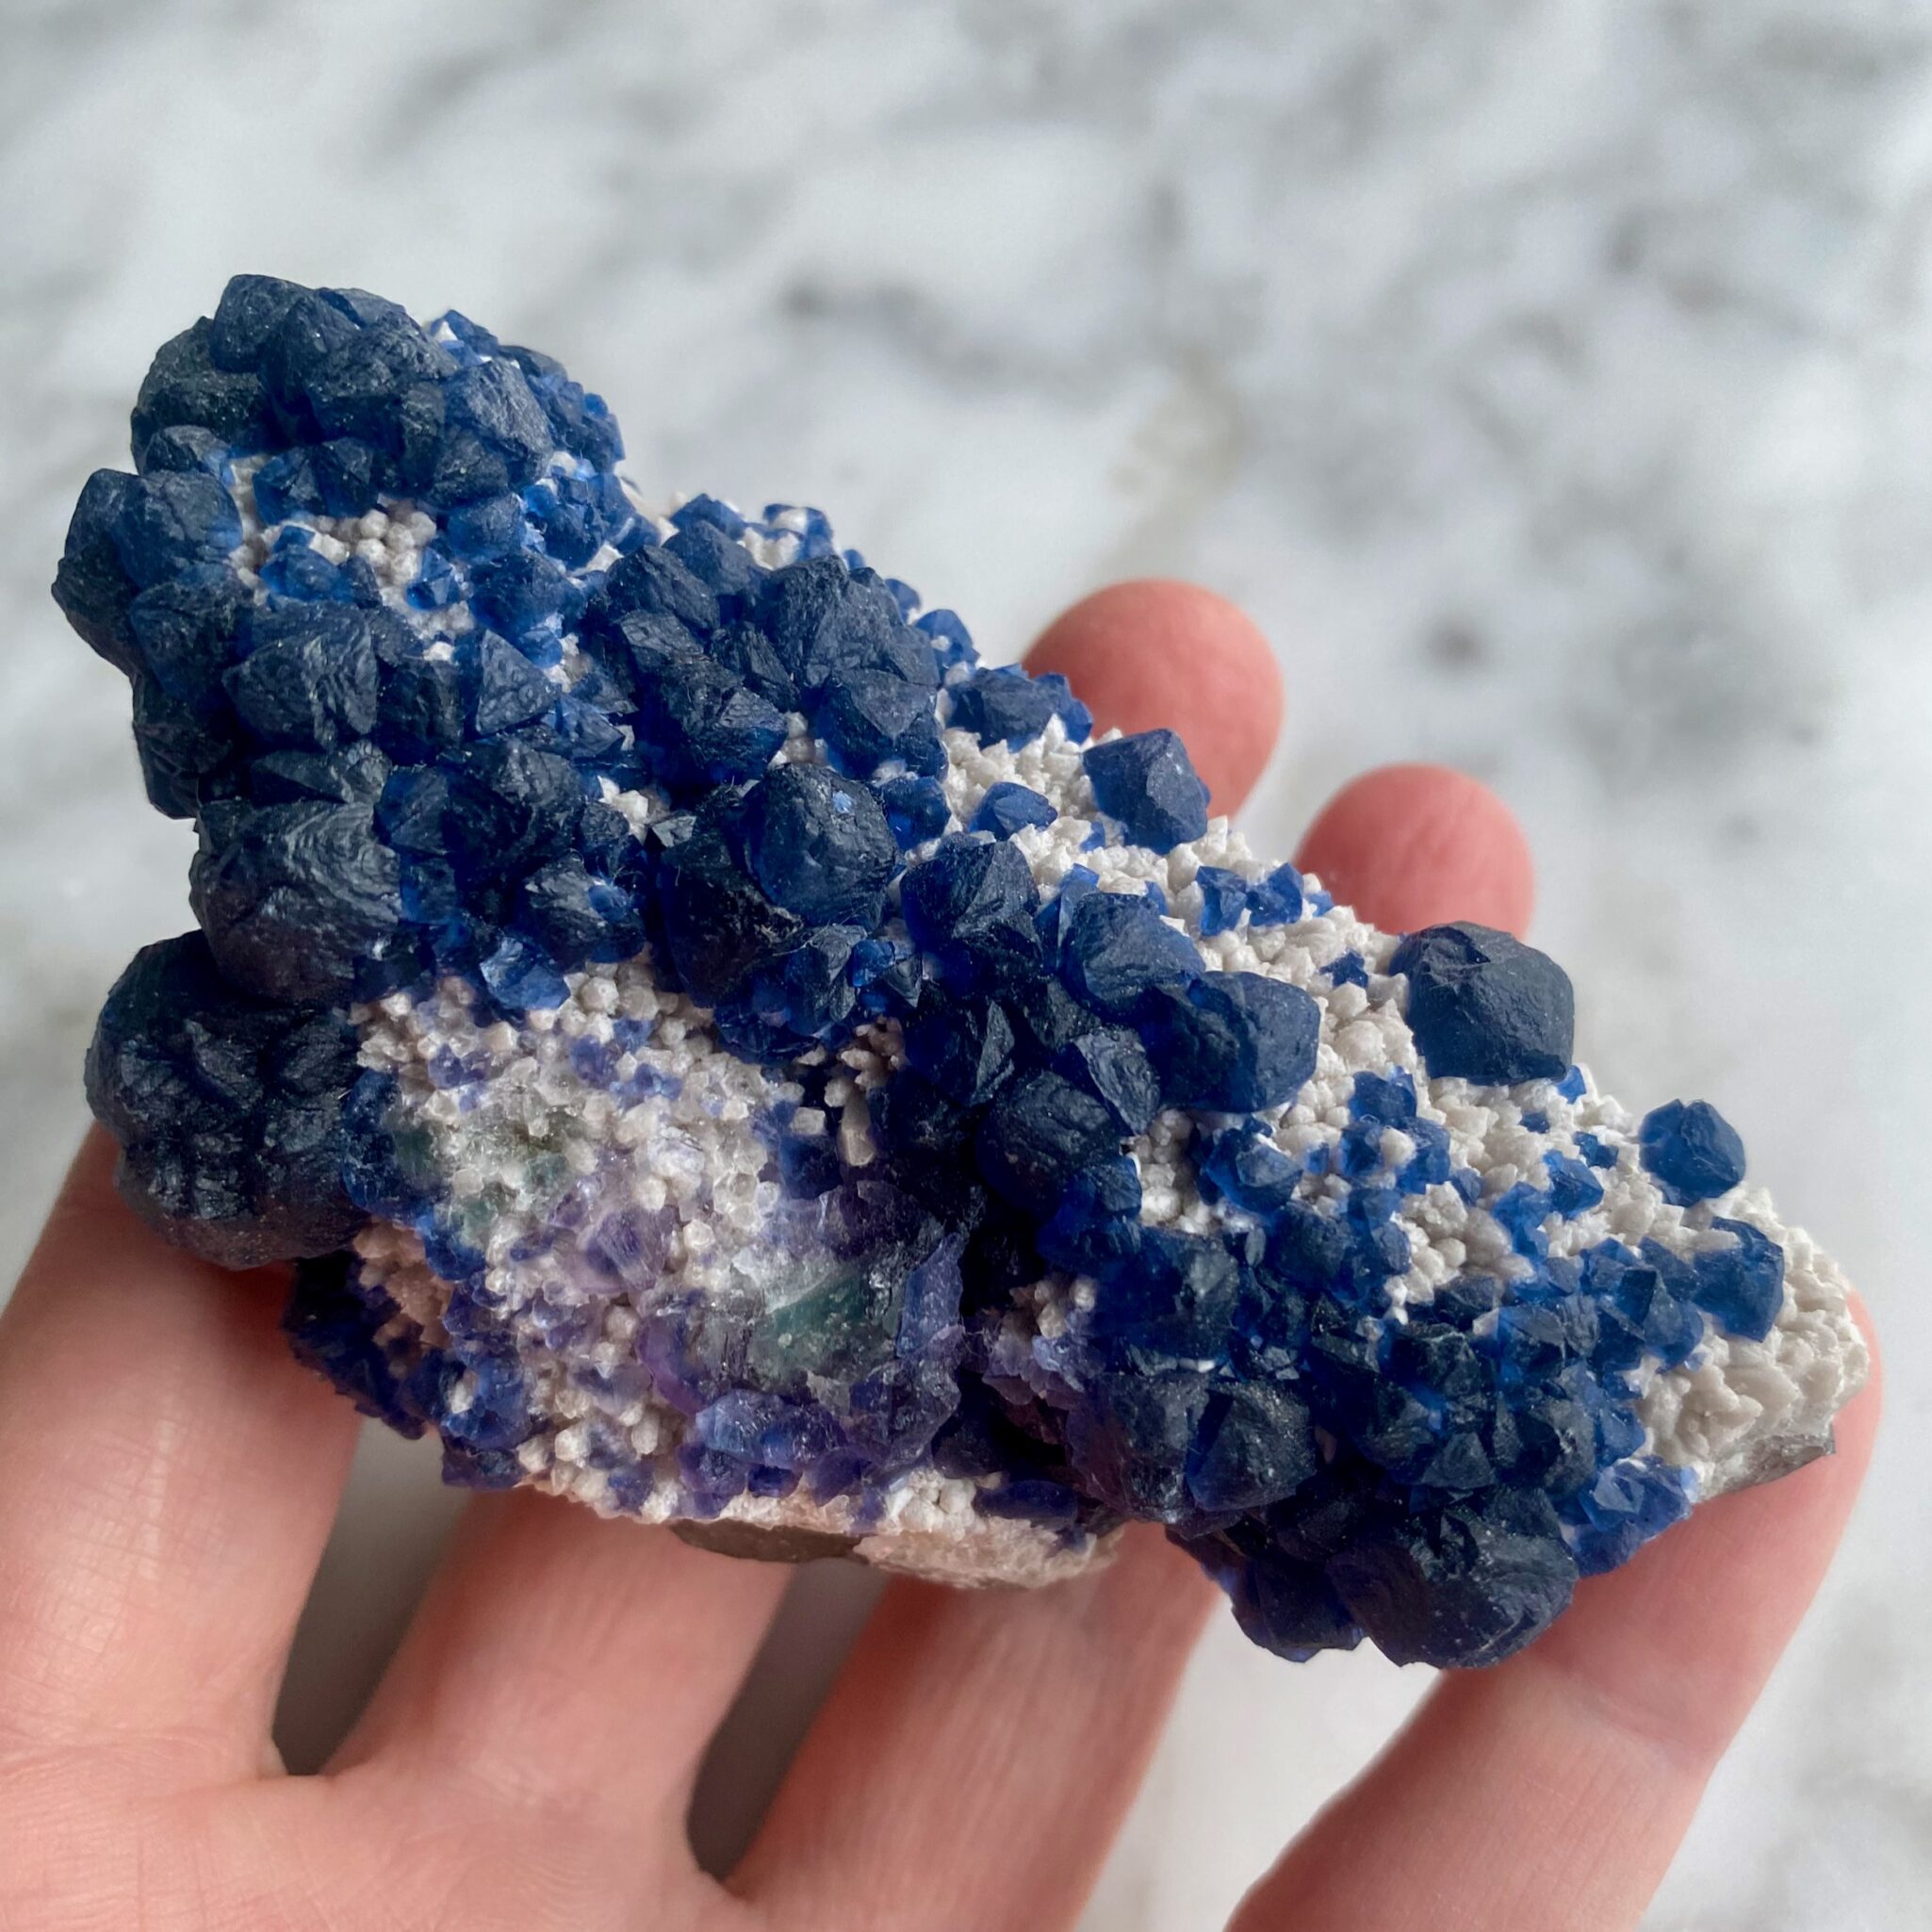 Blueberry Blue Fluorite on Quartz from inner mongolia - Fluorite Bleue Bleuet sur Quartz